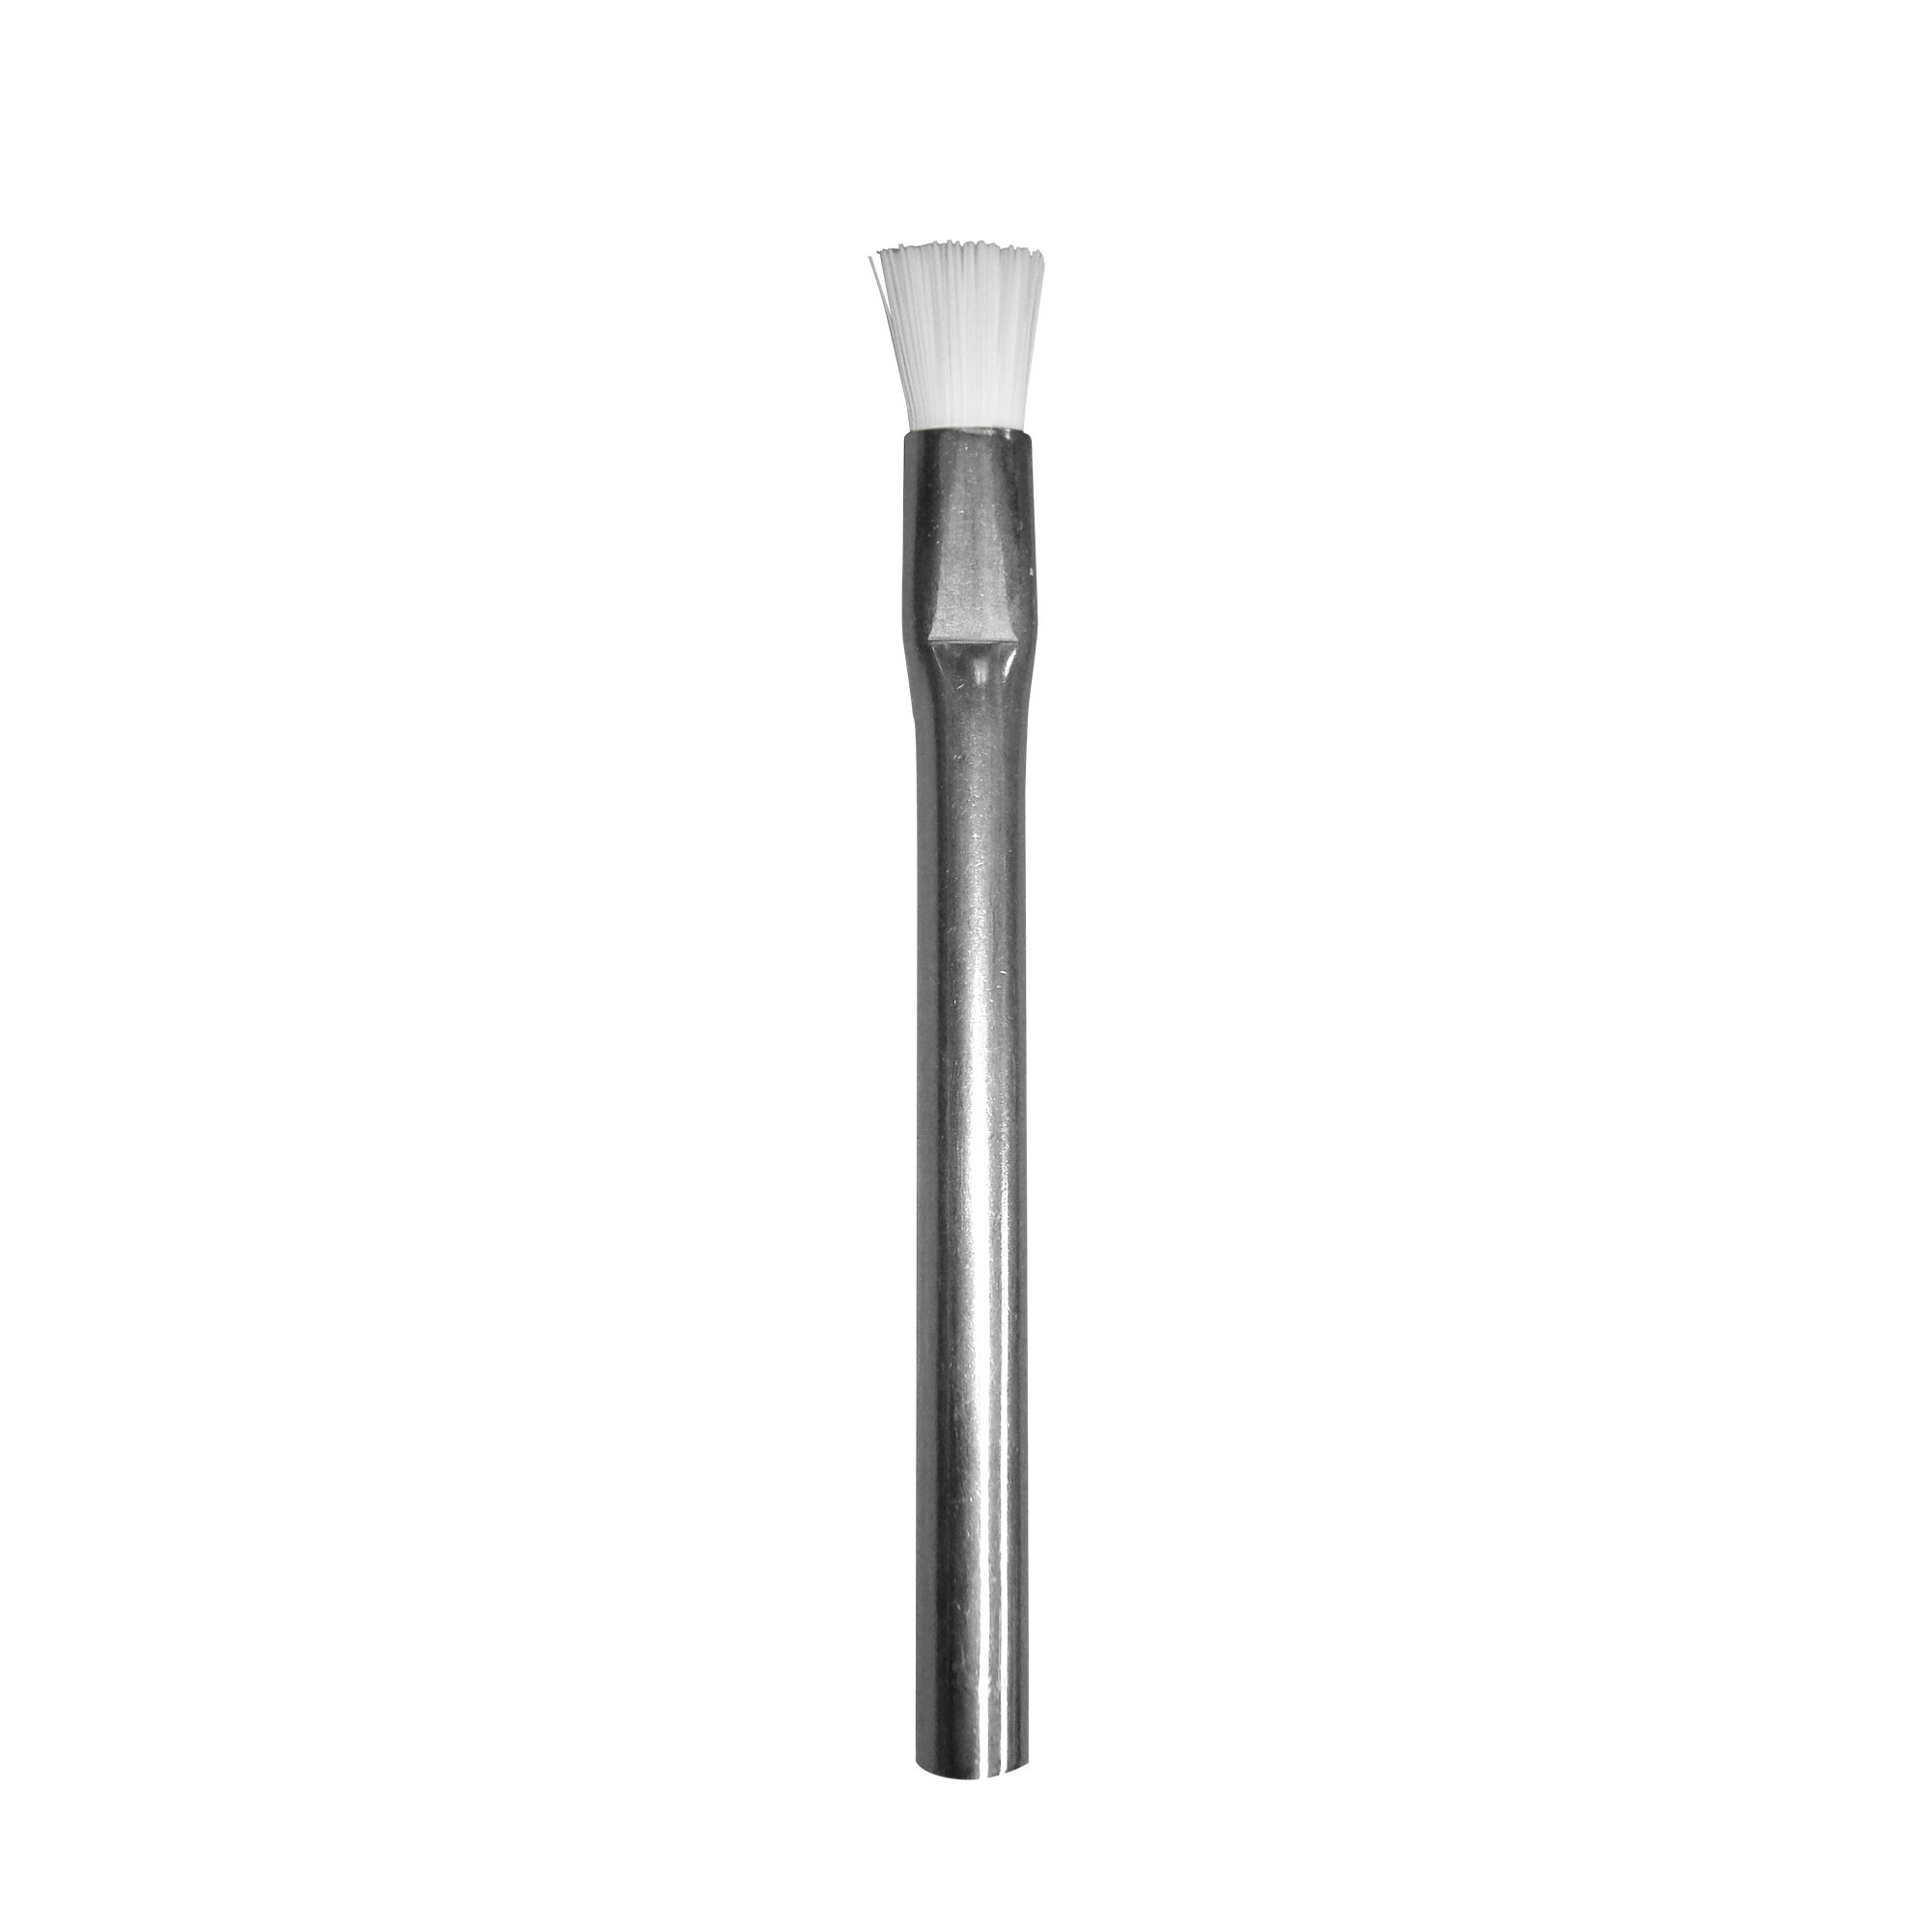 Applicator Brush — 0.011" PTFE Bristle / 3/8" Diameter Stainless Steel Tube Handle